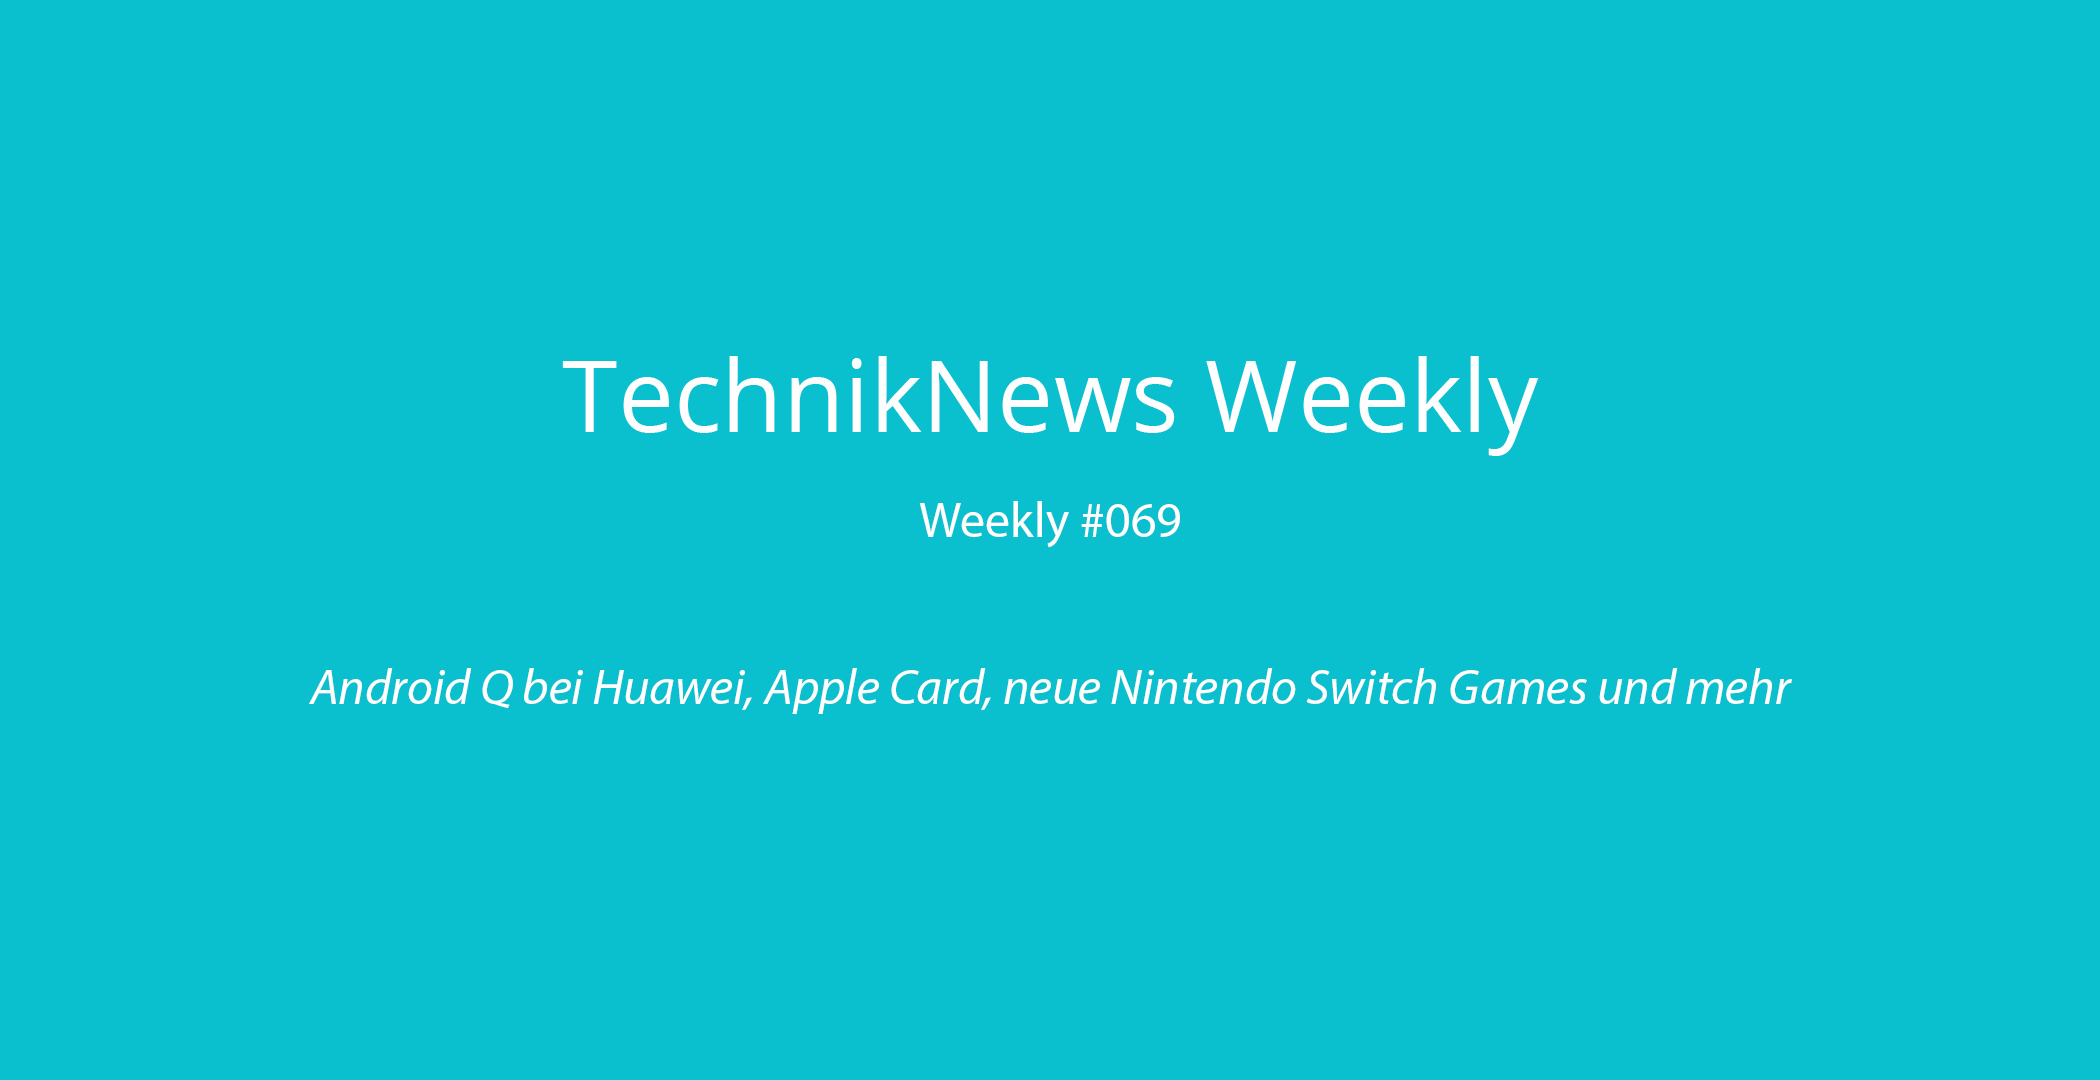 TechnikNews Weekly # 069